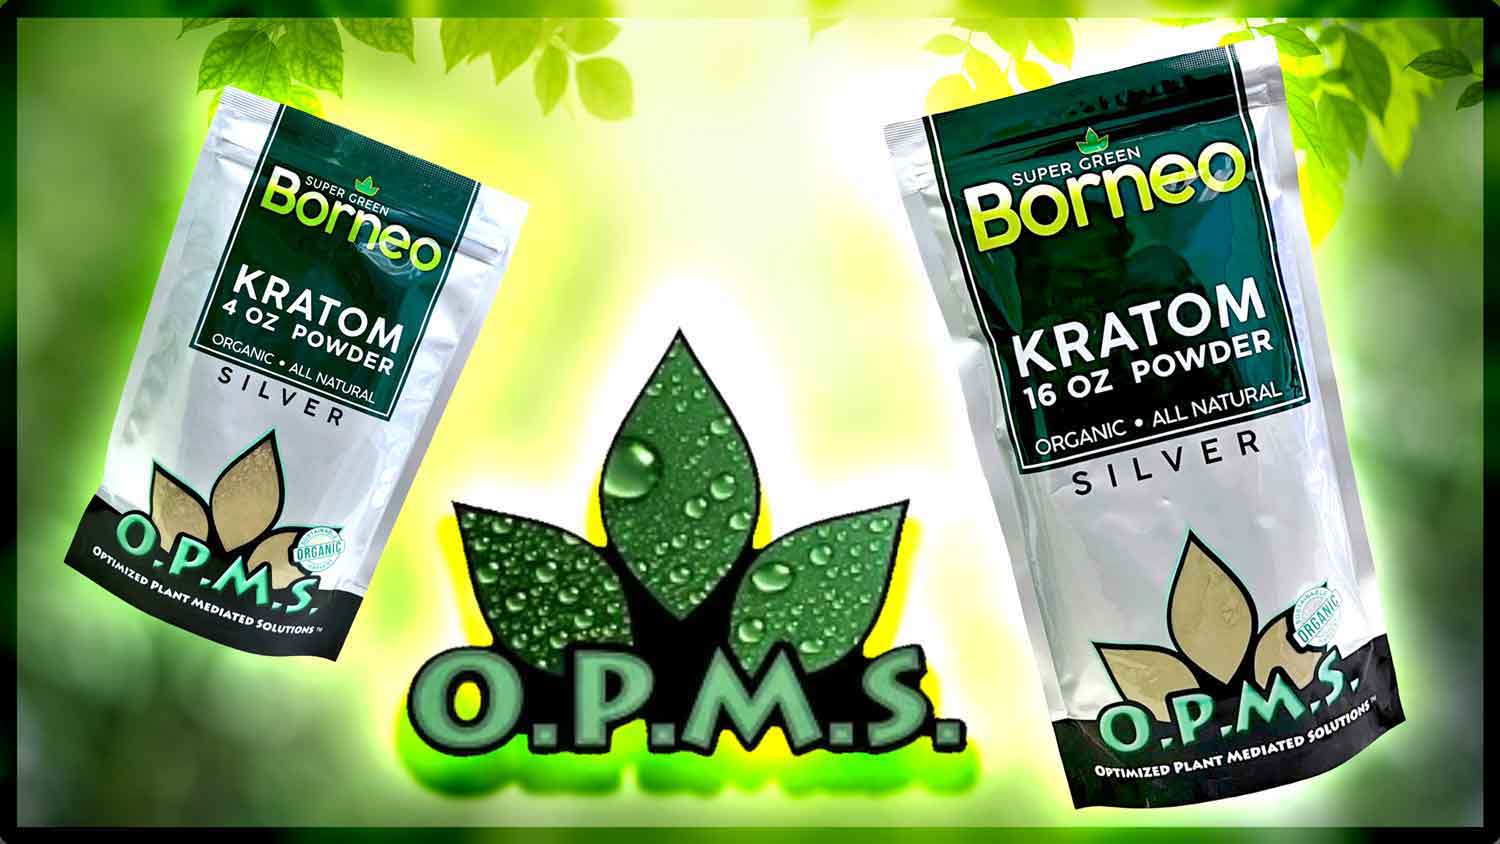 OPMS Silver Super Green Borneo Kratom Powder